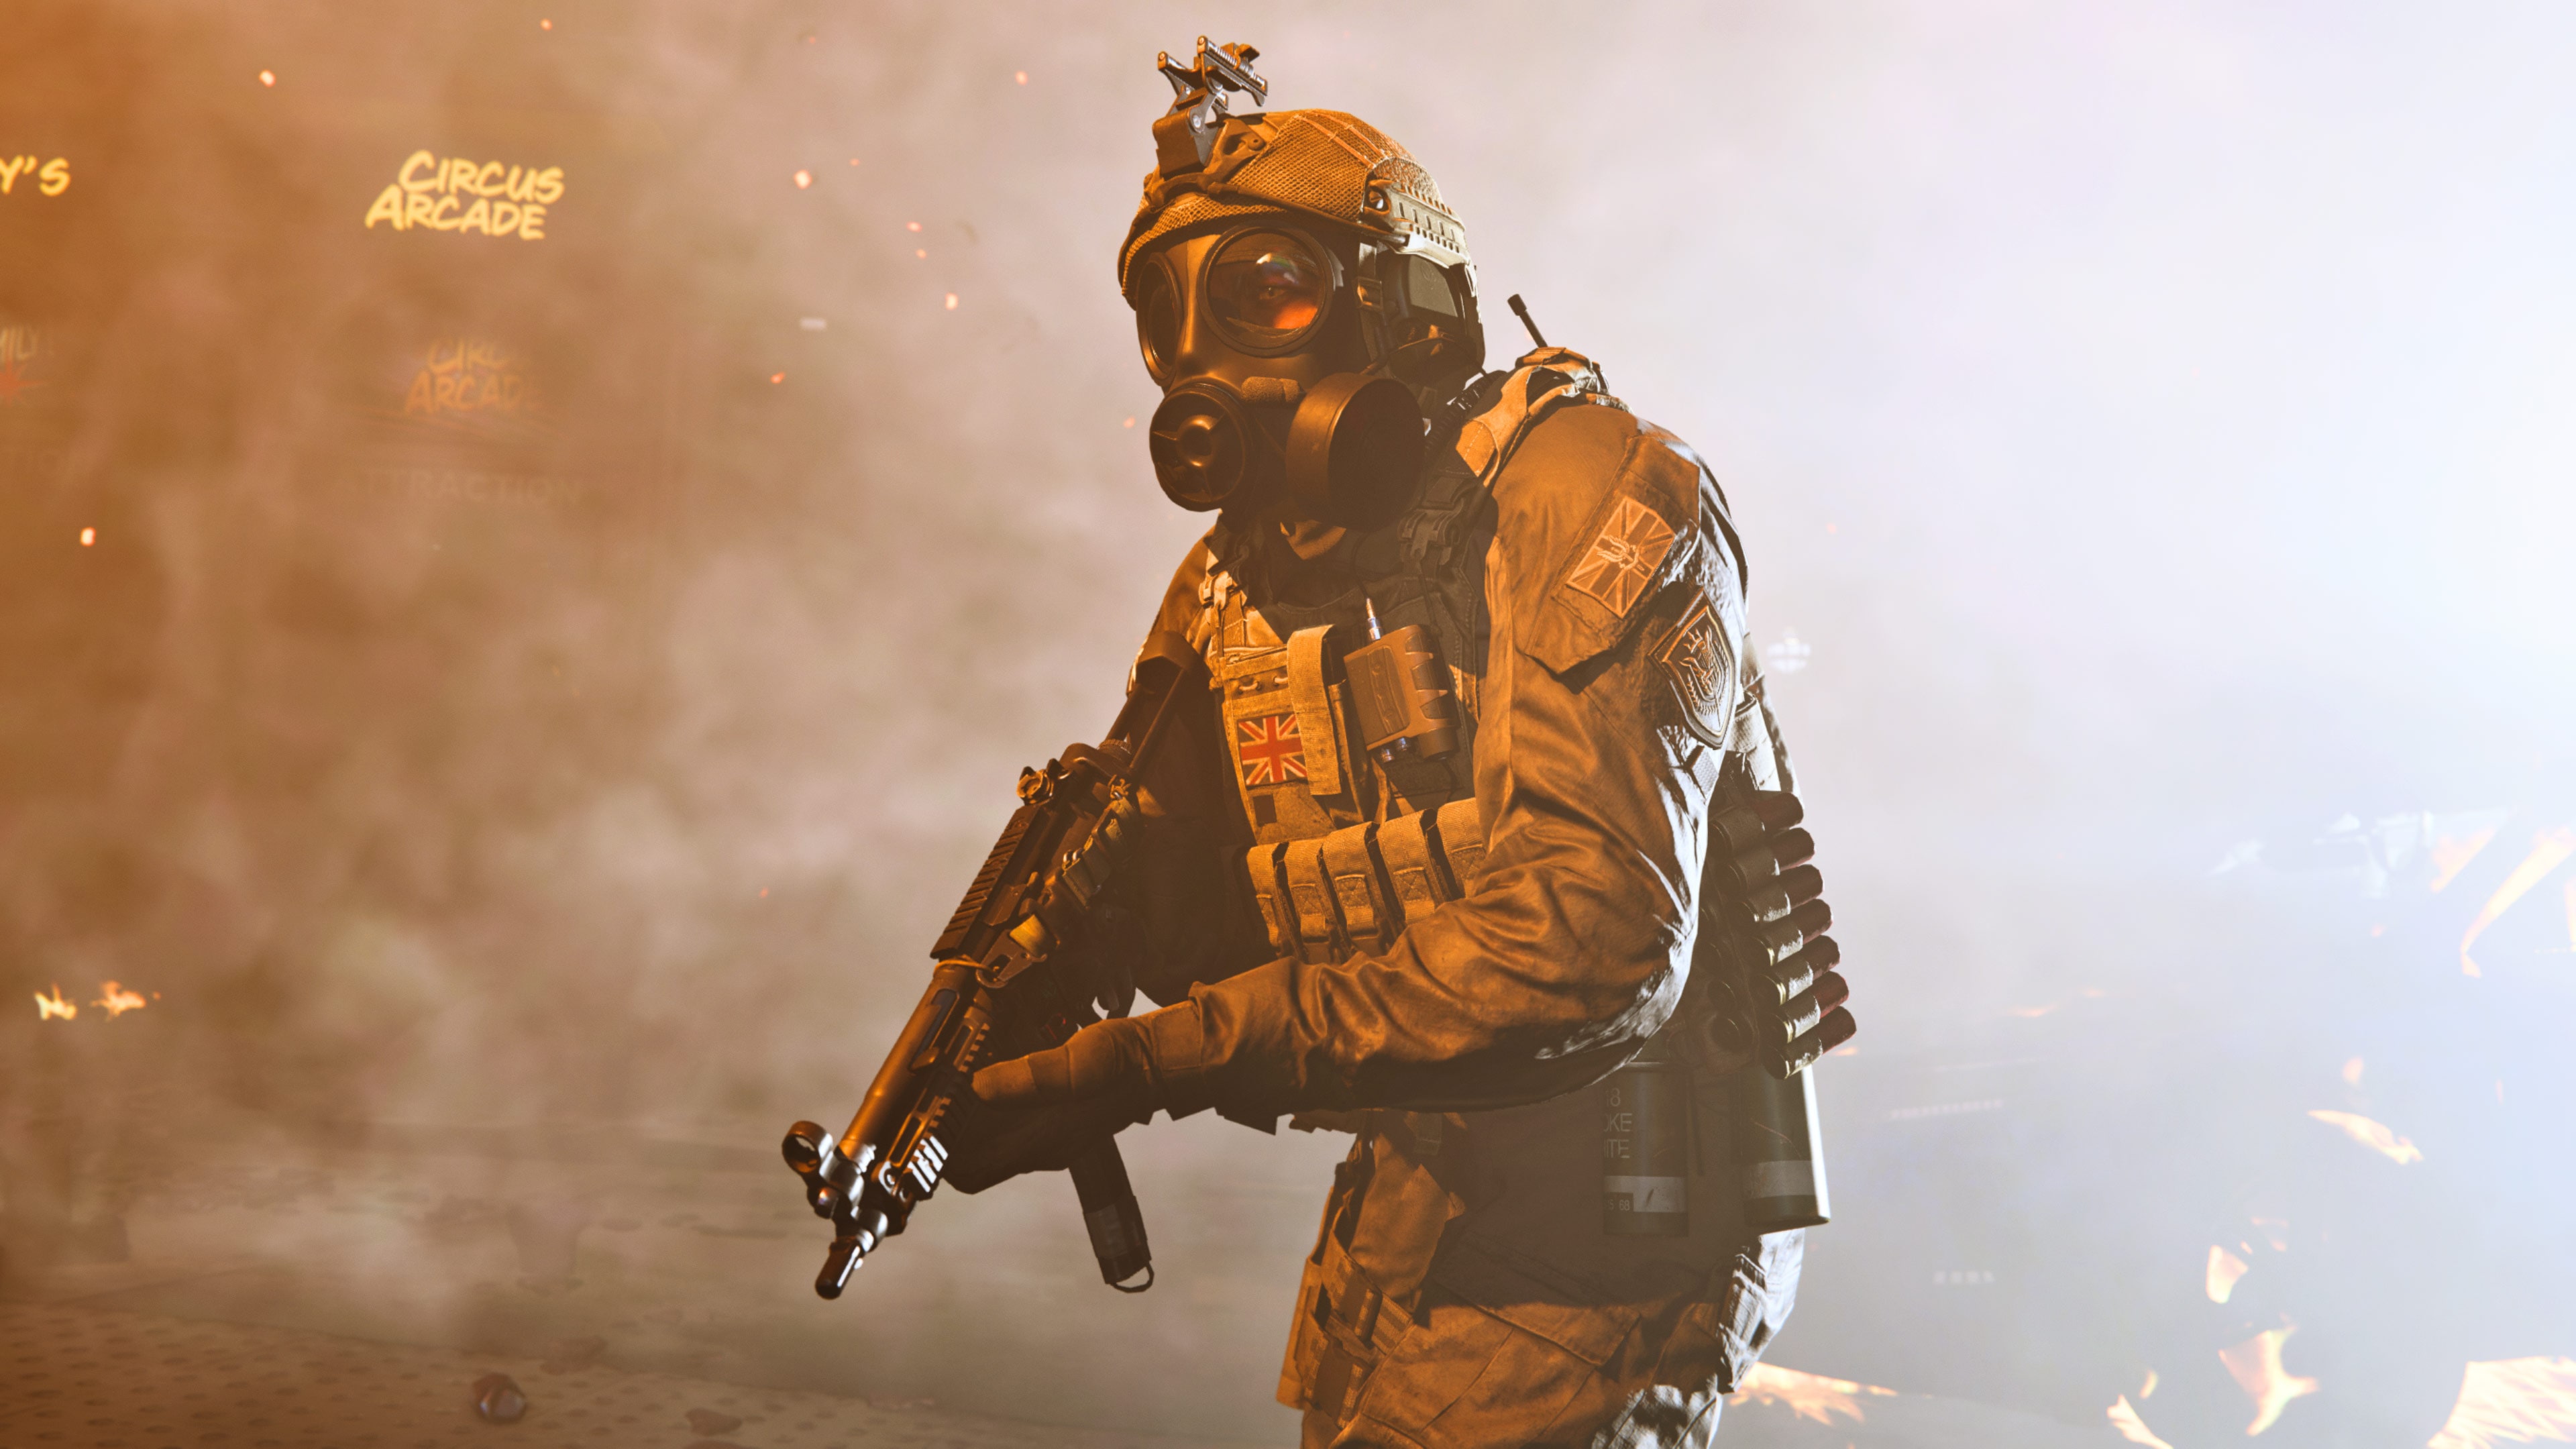 500 Pontos do Modern Warfare II e Call of Duty Warzone 2.0 Xbox - PentaKill  Store - Gift Card e Games